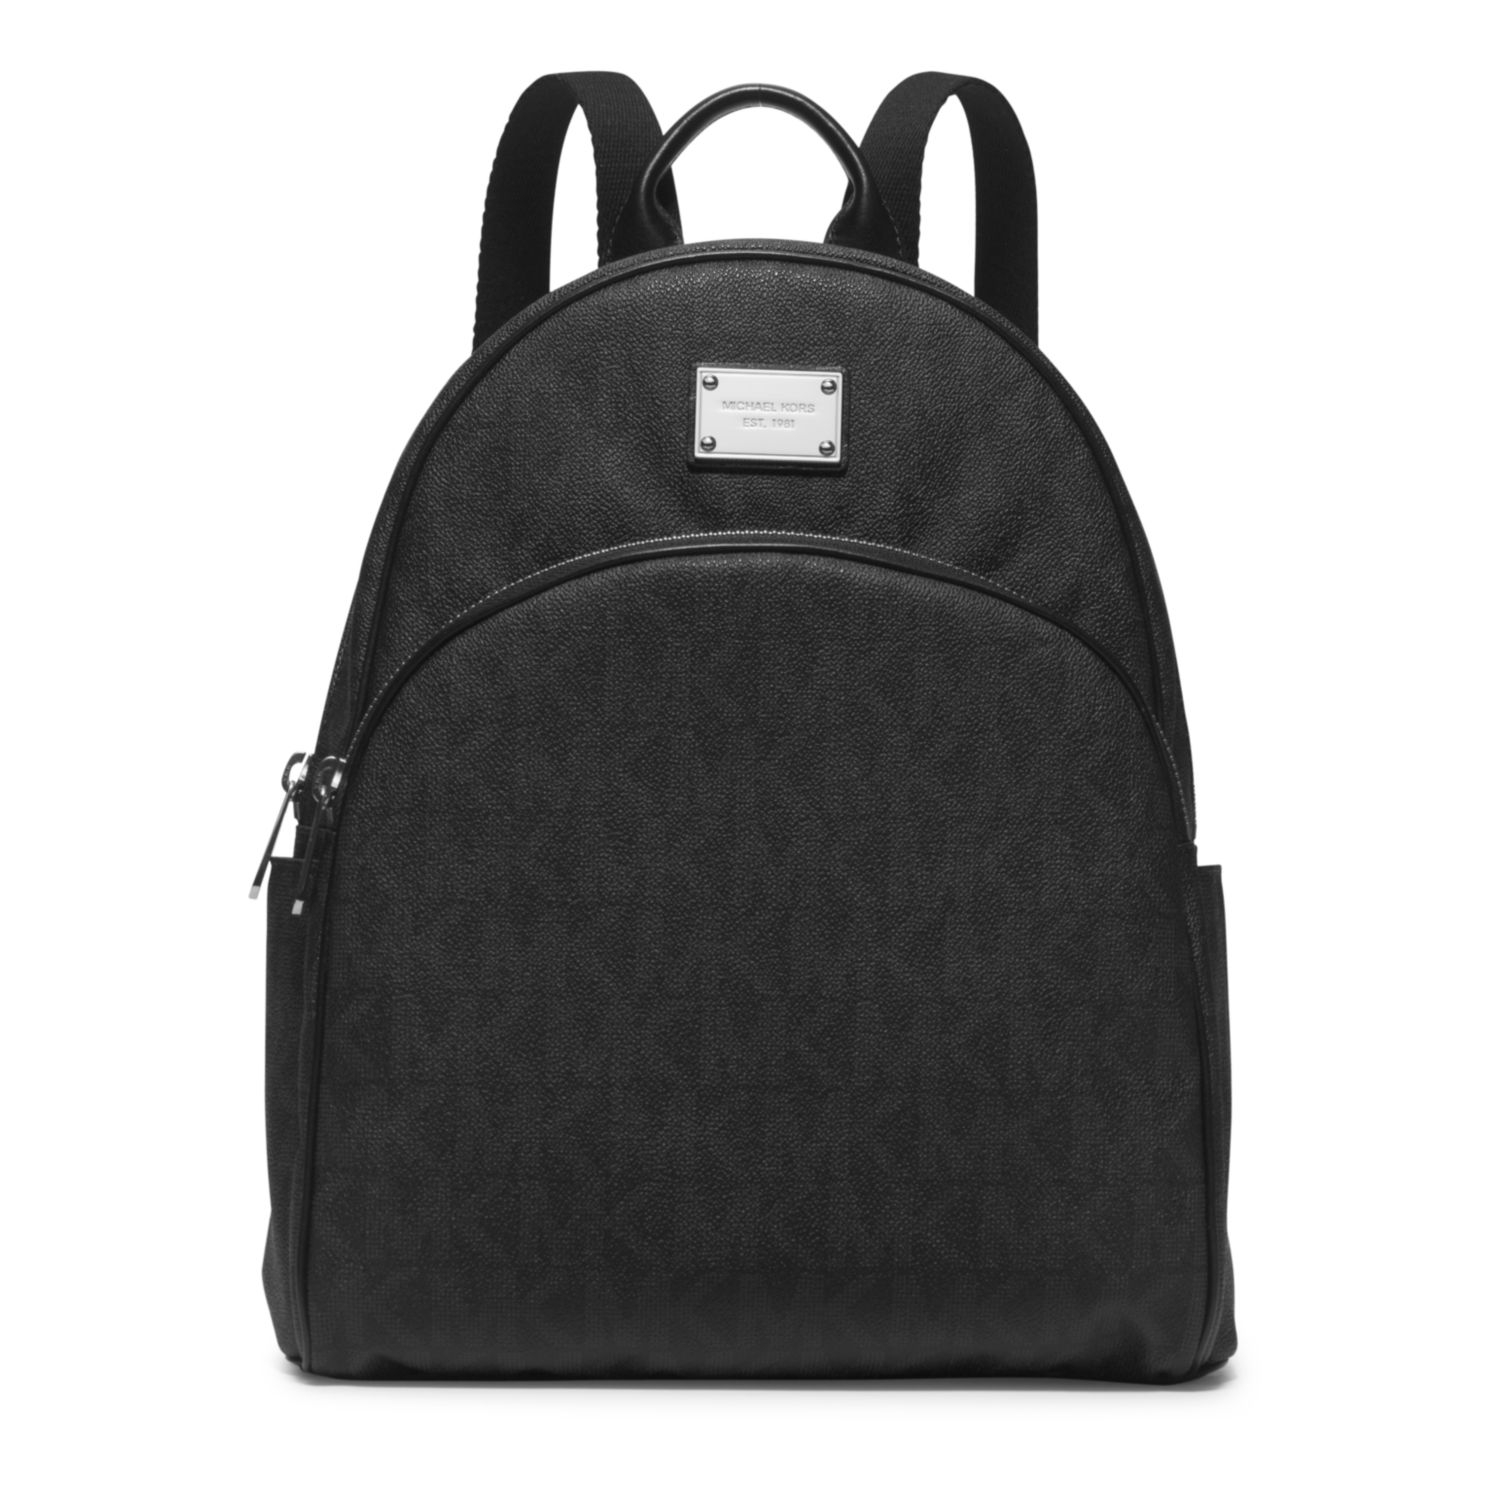 Lyst - Michael Kors Jet Set Travel Large Logo Backpack in Black